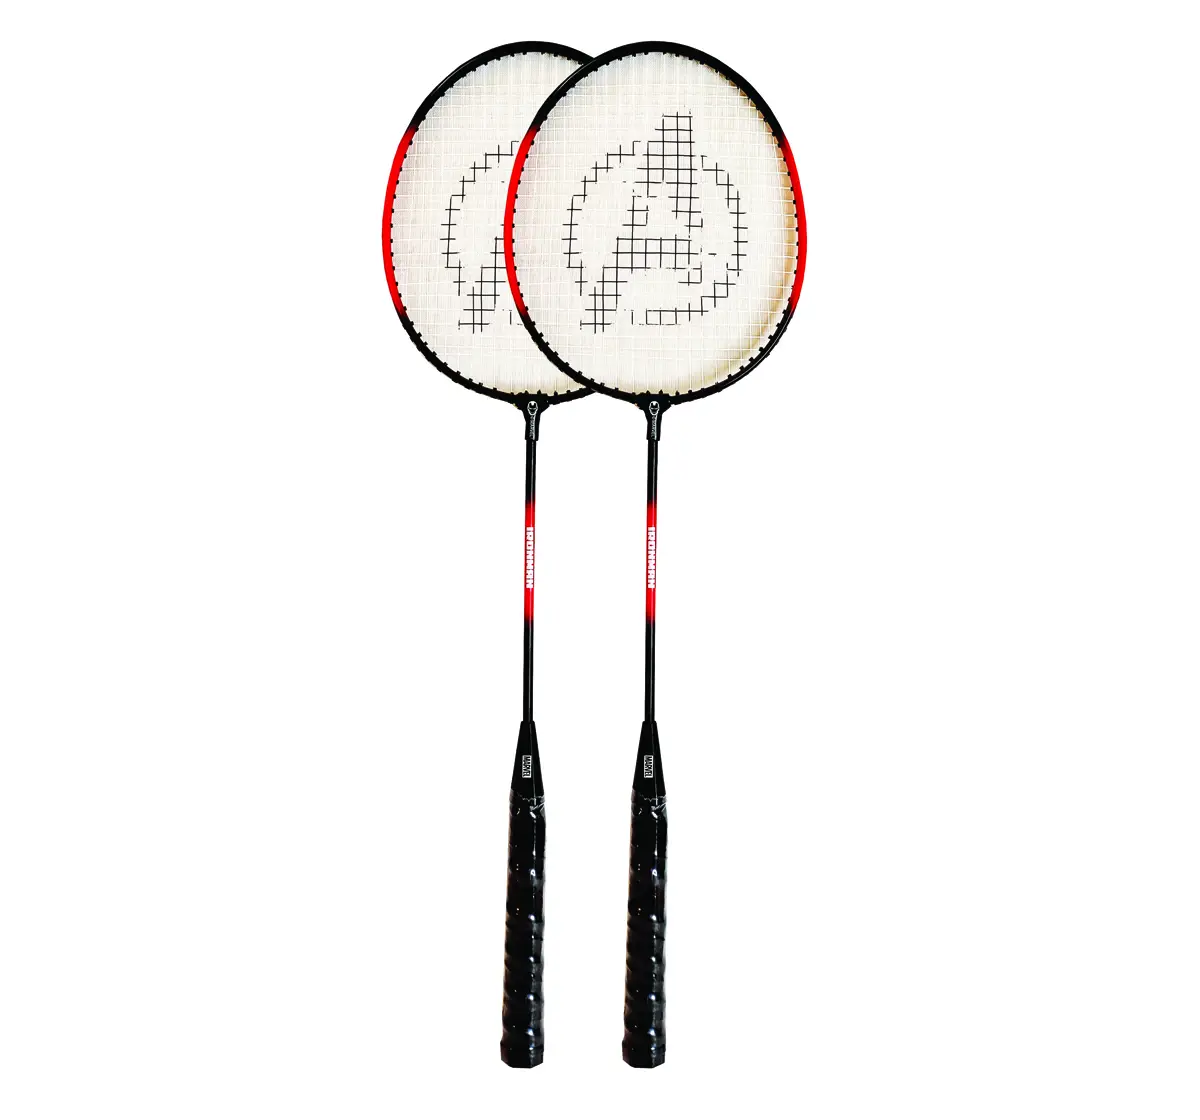 Starter Iron Man Badminton Racket Set of 2 Multicolour, 6Y+